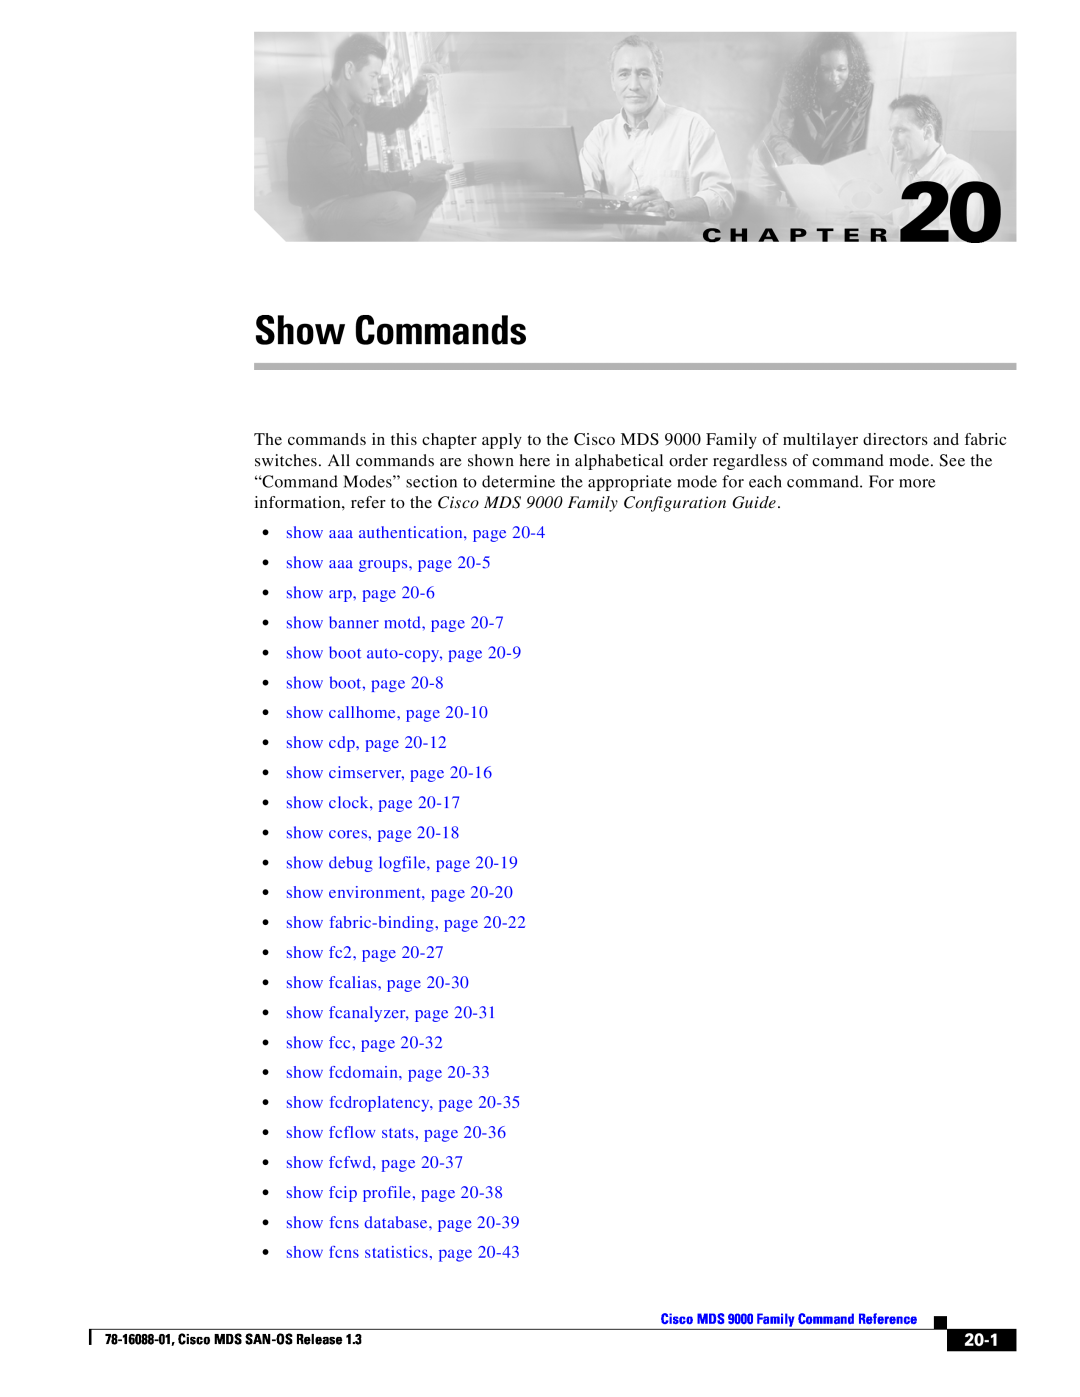 Cisco Systems MDS 9000 manual 20-1, Show Commands, C H A P T E R 